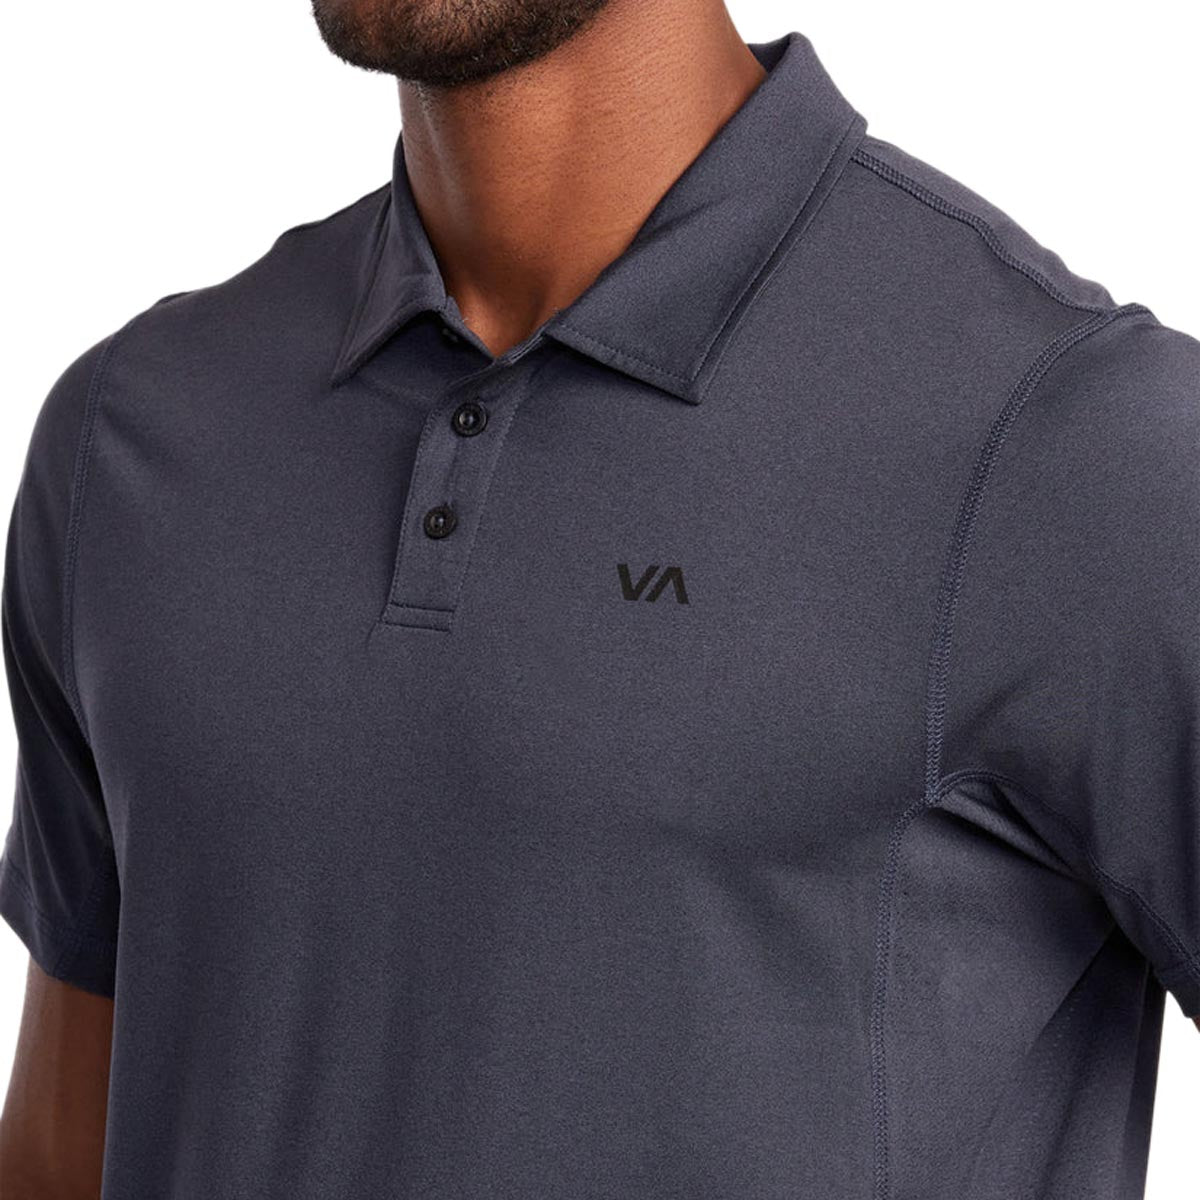 RVCA Sport Vent Polo Shirt - Navy Heather image 2